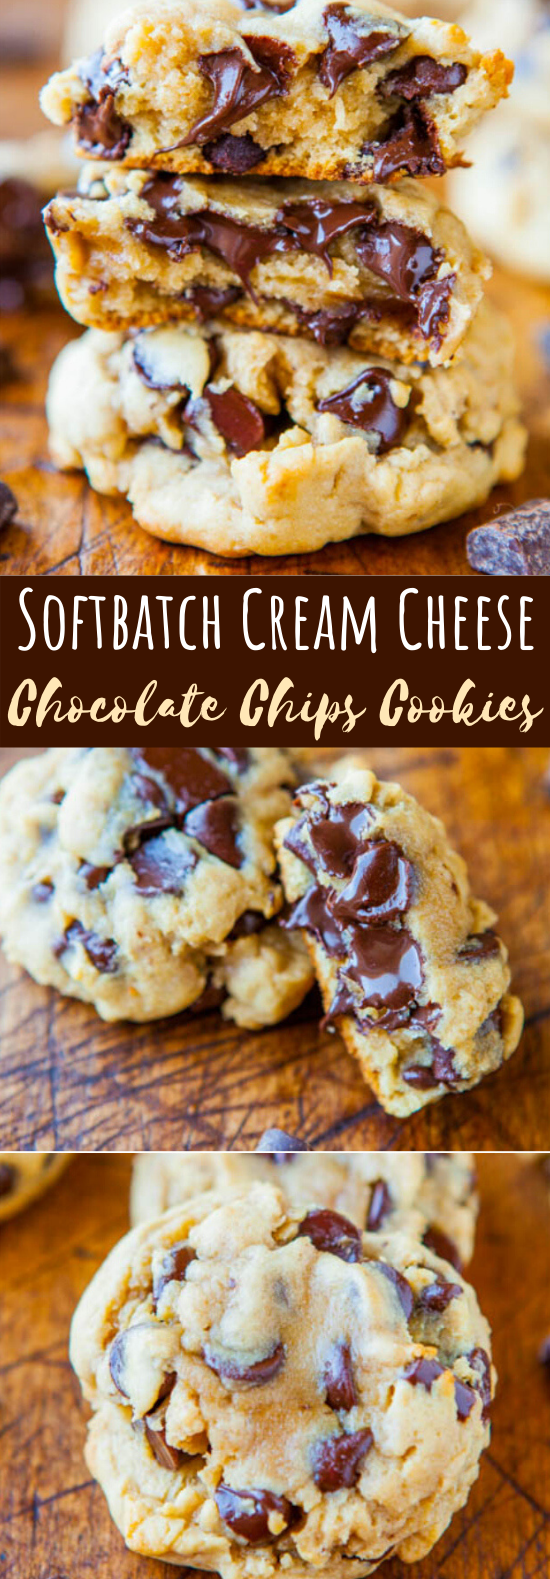 Softbatch Cream Cheese Chocolate Chip Cookies #cookies #baking #desserts #chocolatechips #easy